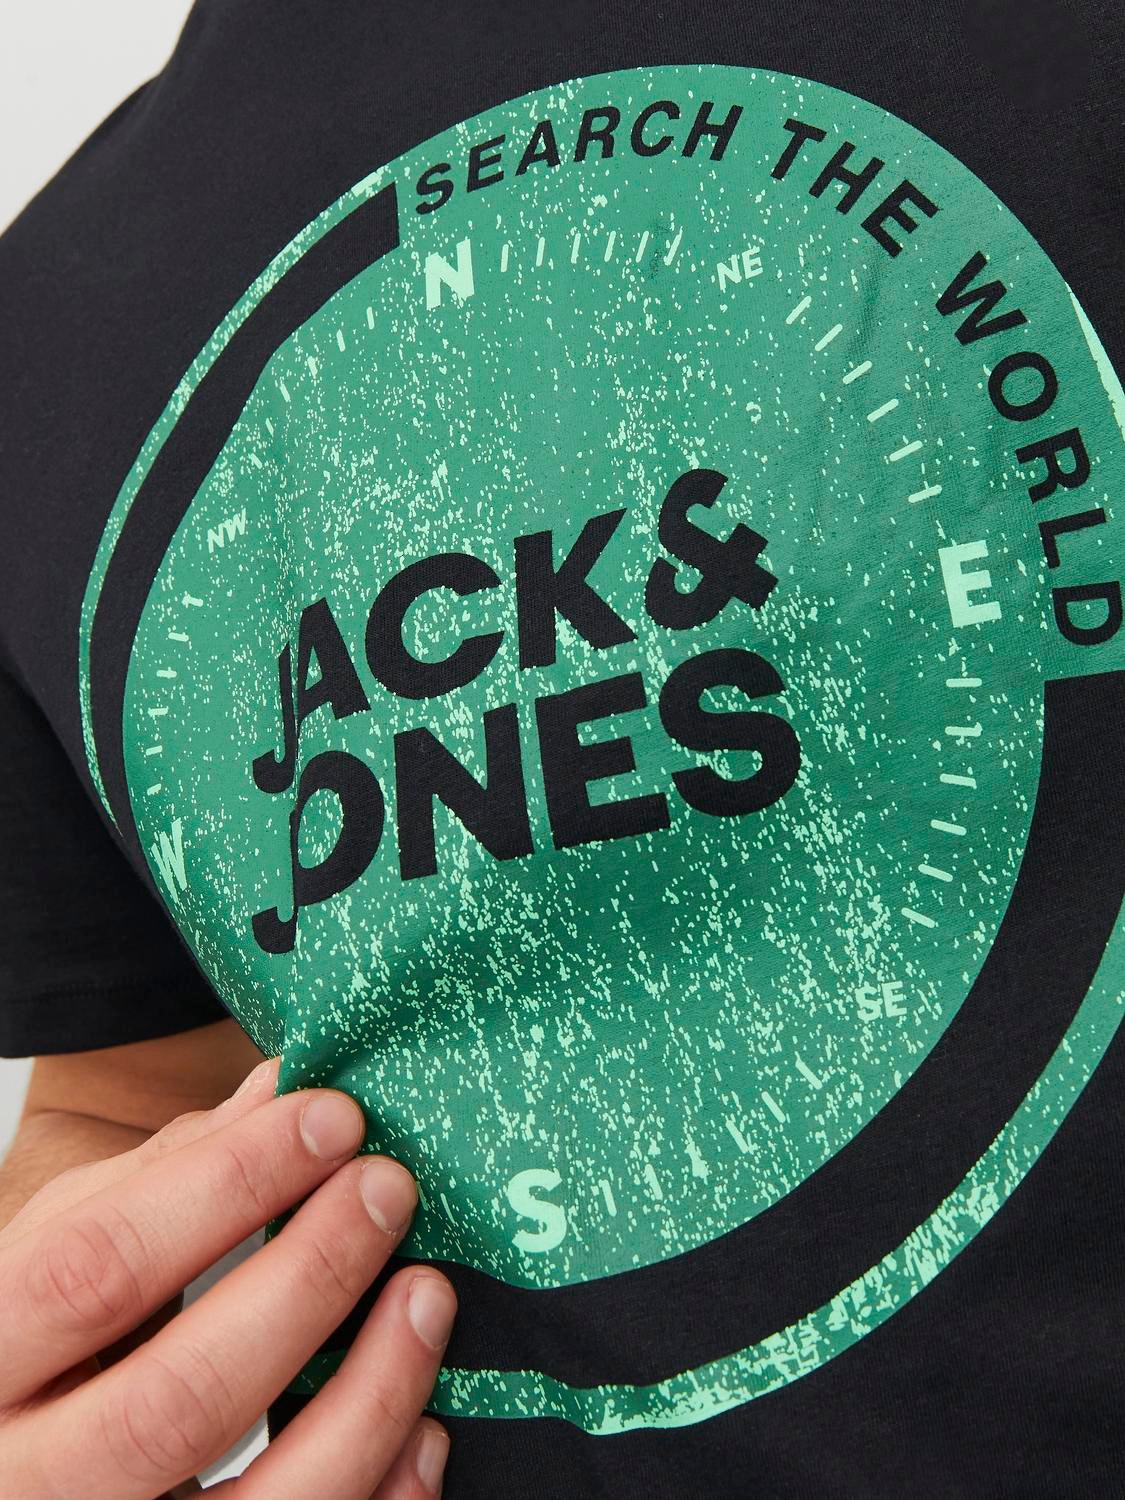 Jack & Jones Logo Crew neck T-shirt -Black - 12234359